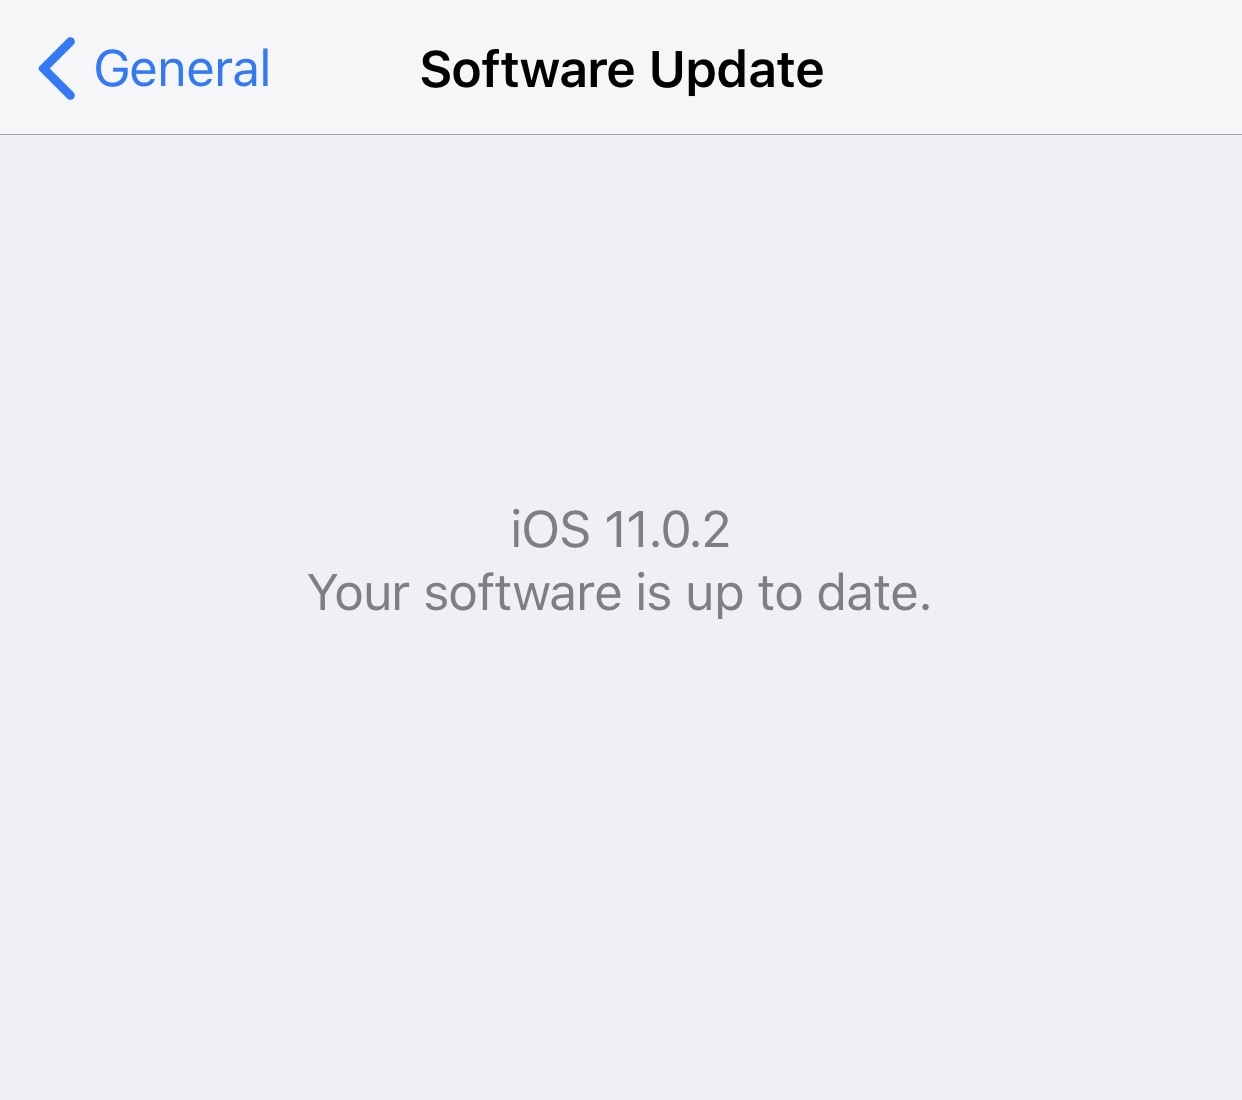 A screenshot showing the iOS software update screen